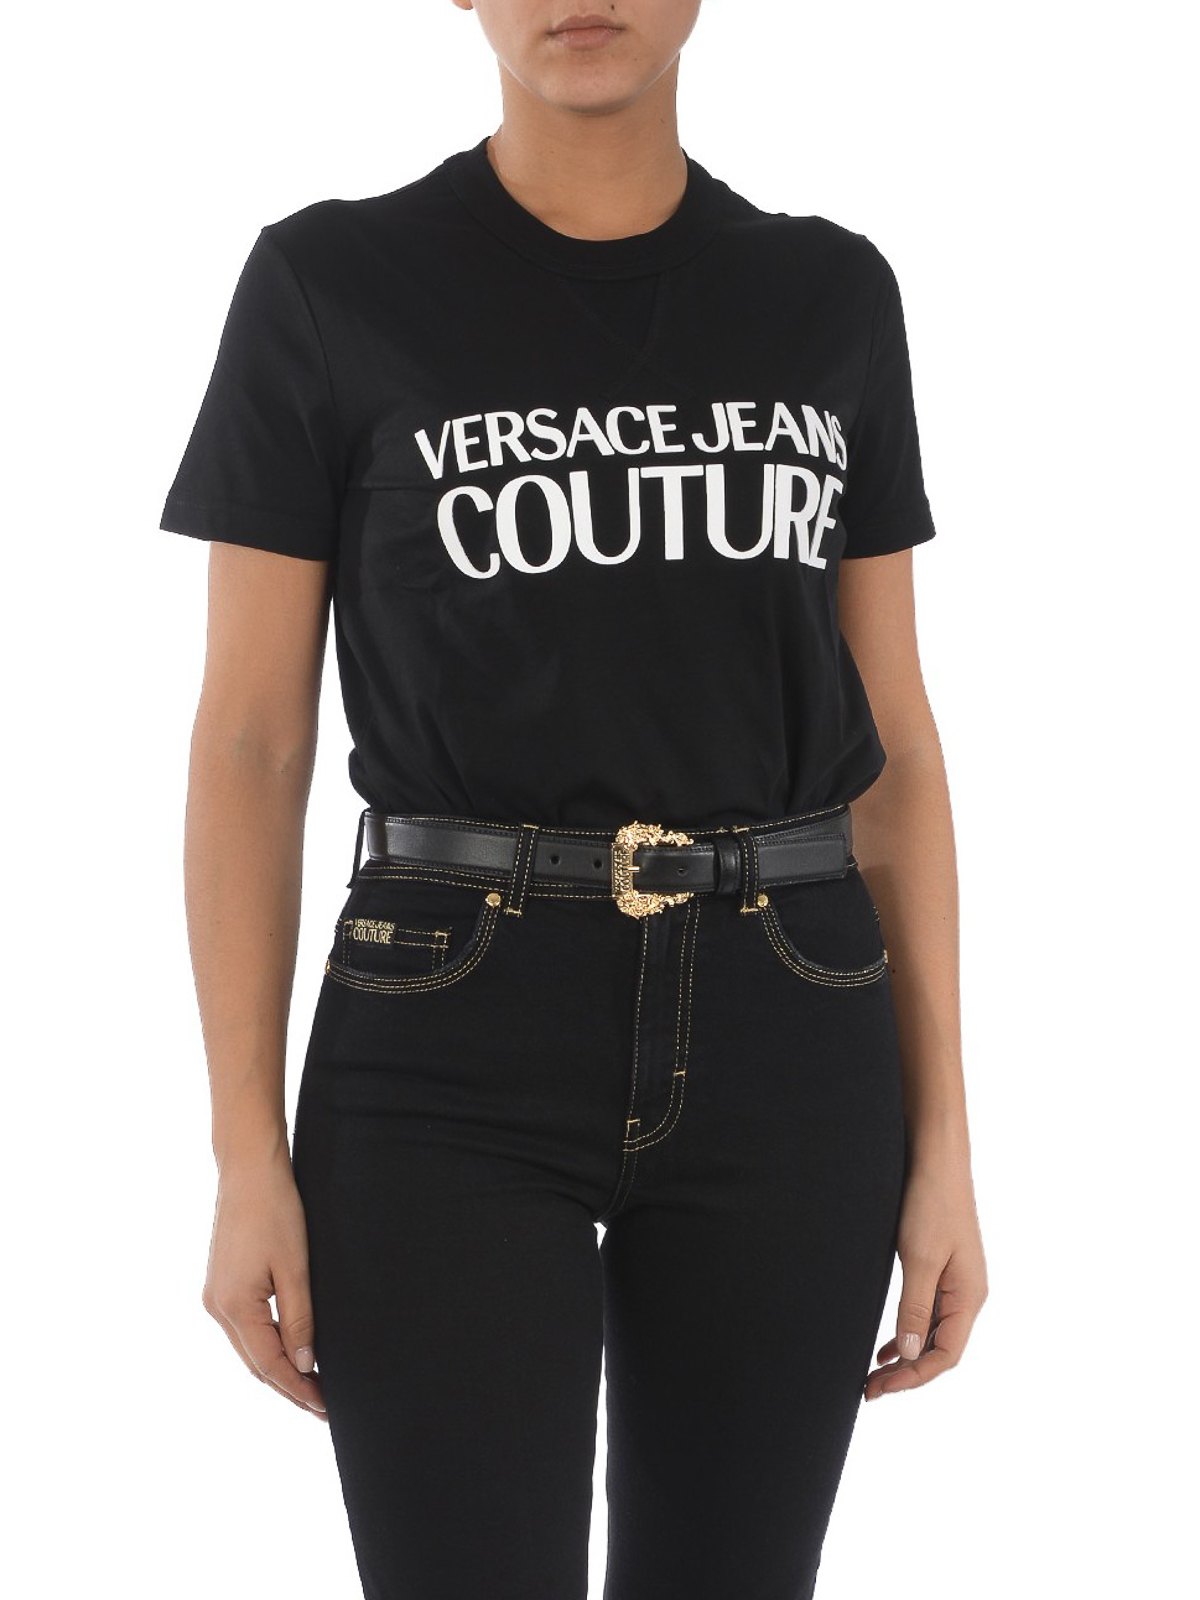 versace jeans couture belt